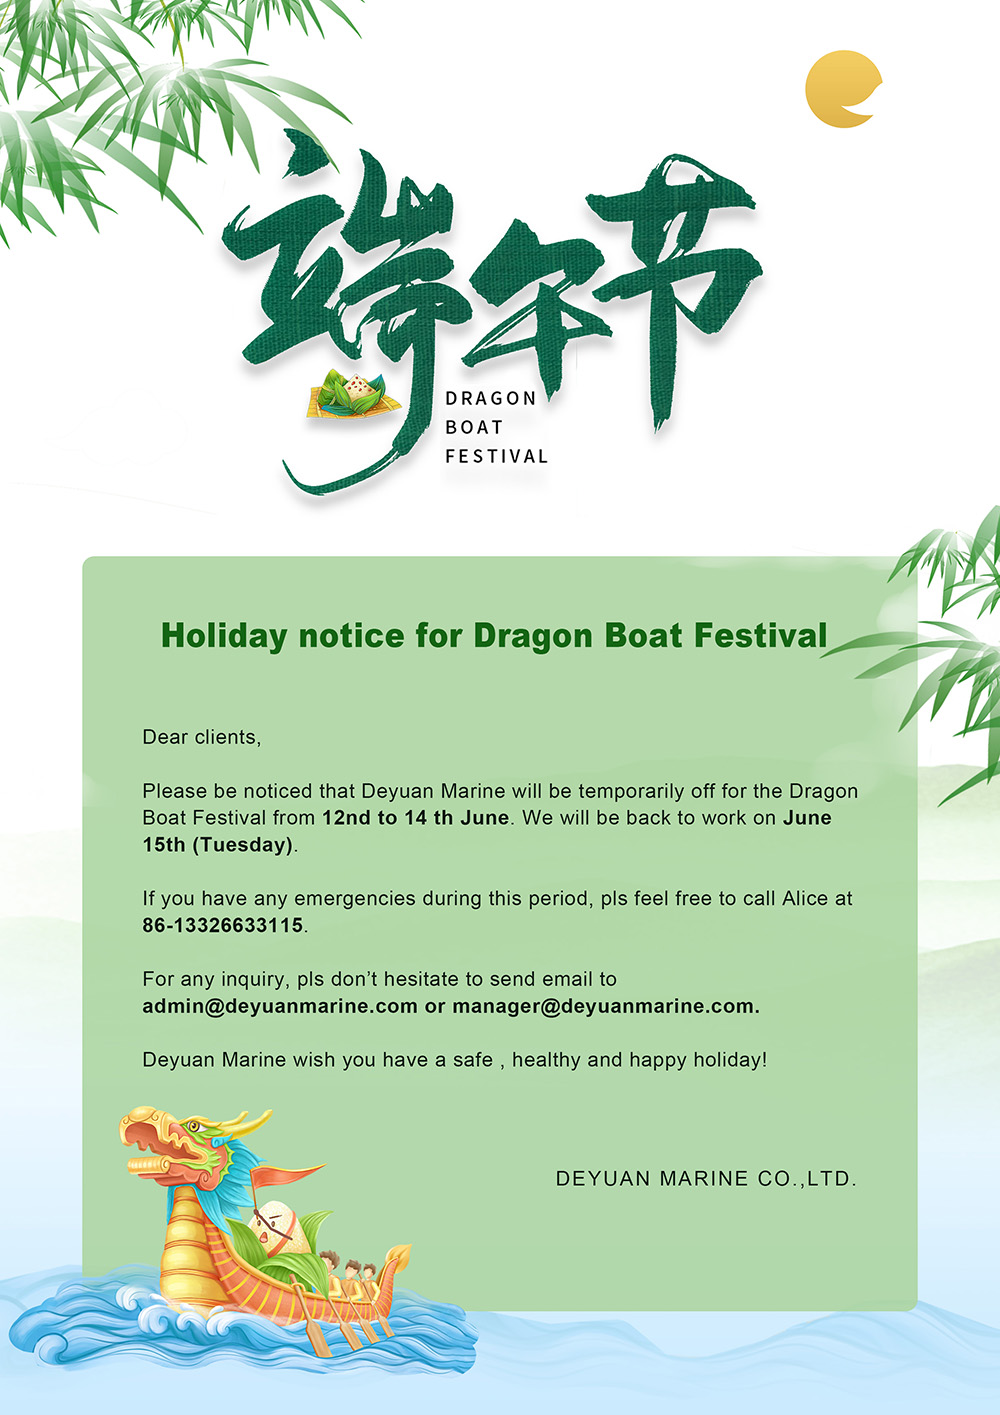 Deyuan Marine Holiday Notice For Dragon Boat Festival 